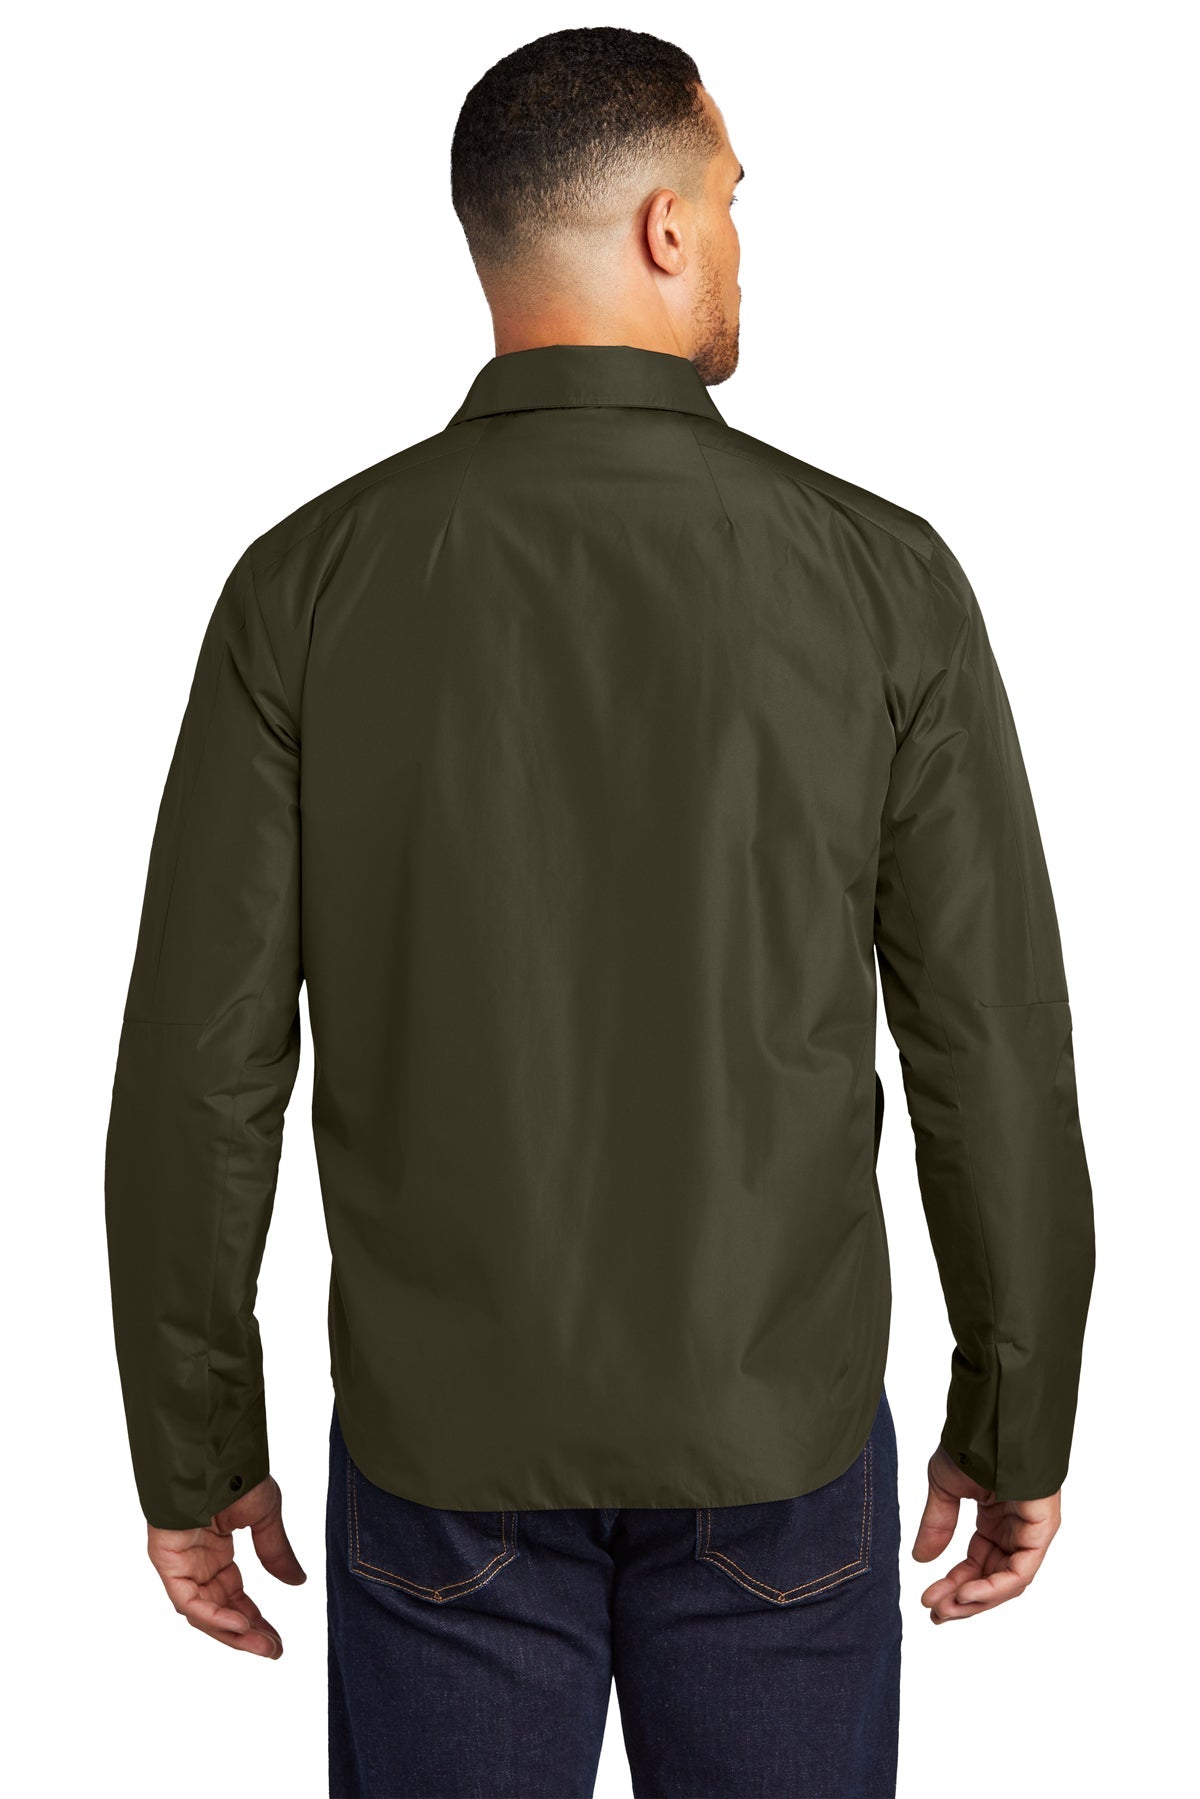 OGIO Reverse Customized Shirt Jackets, Drive Green